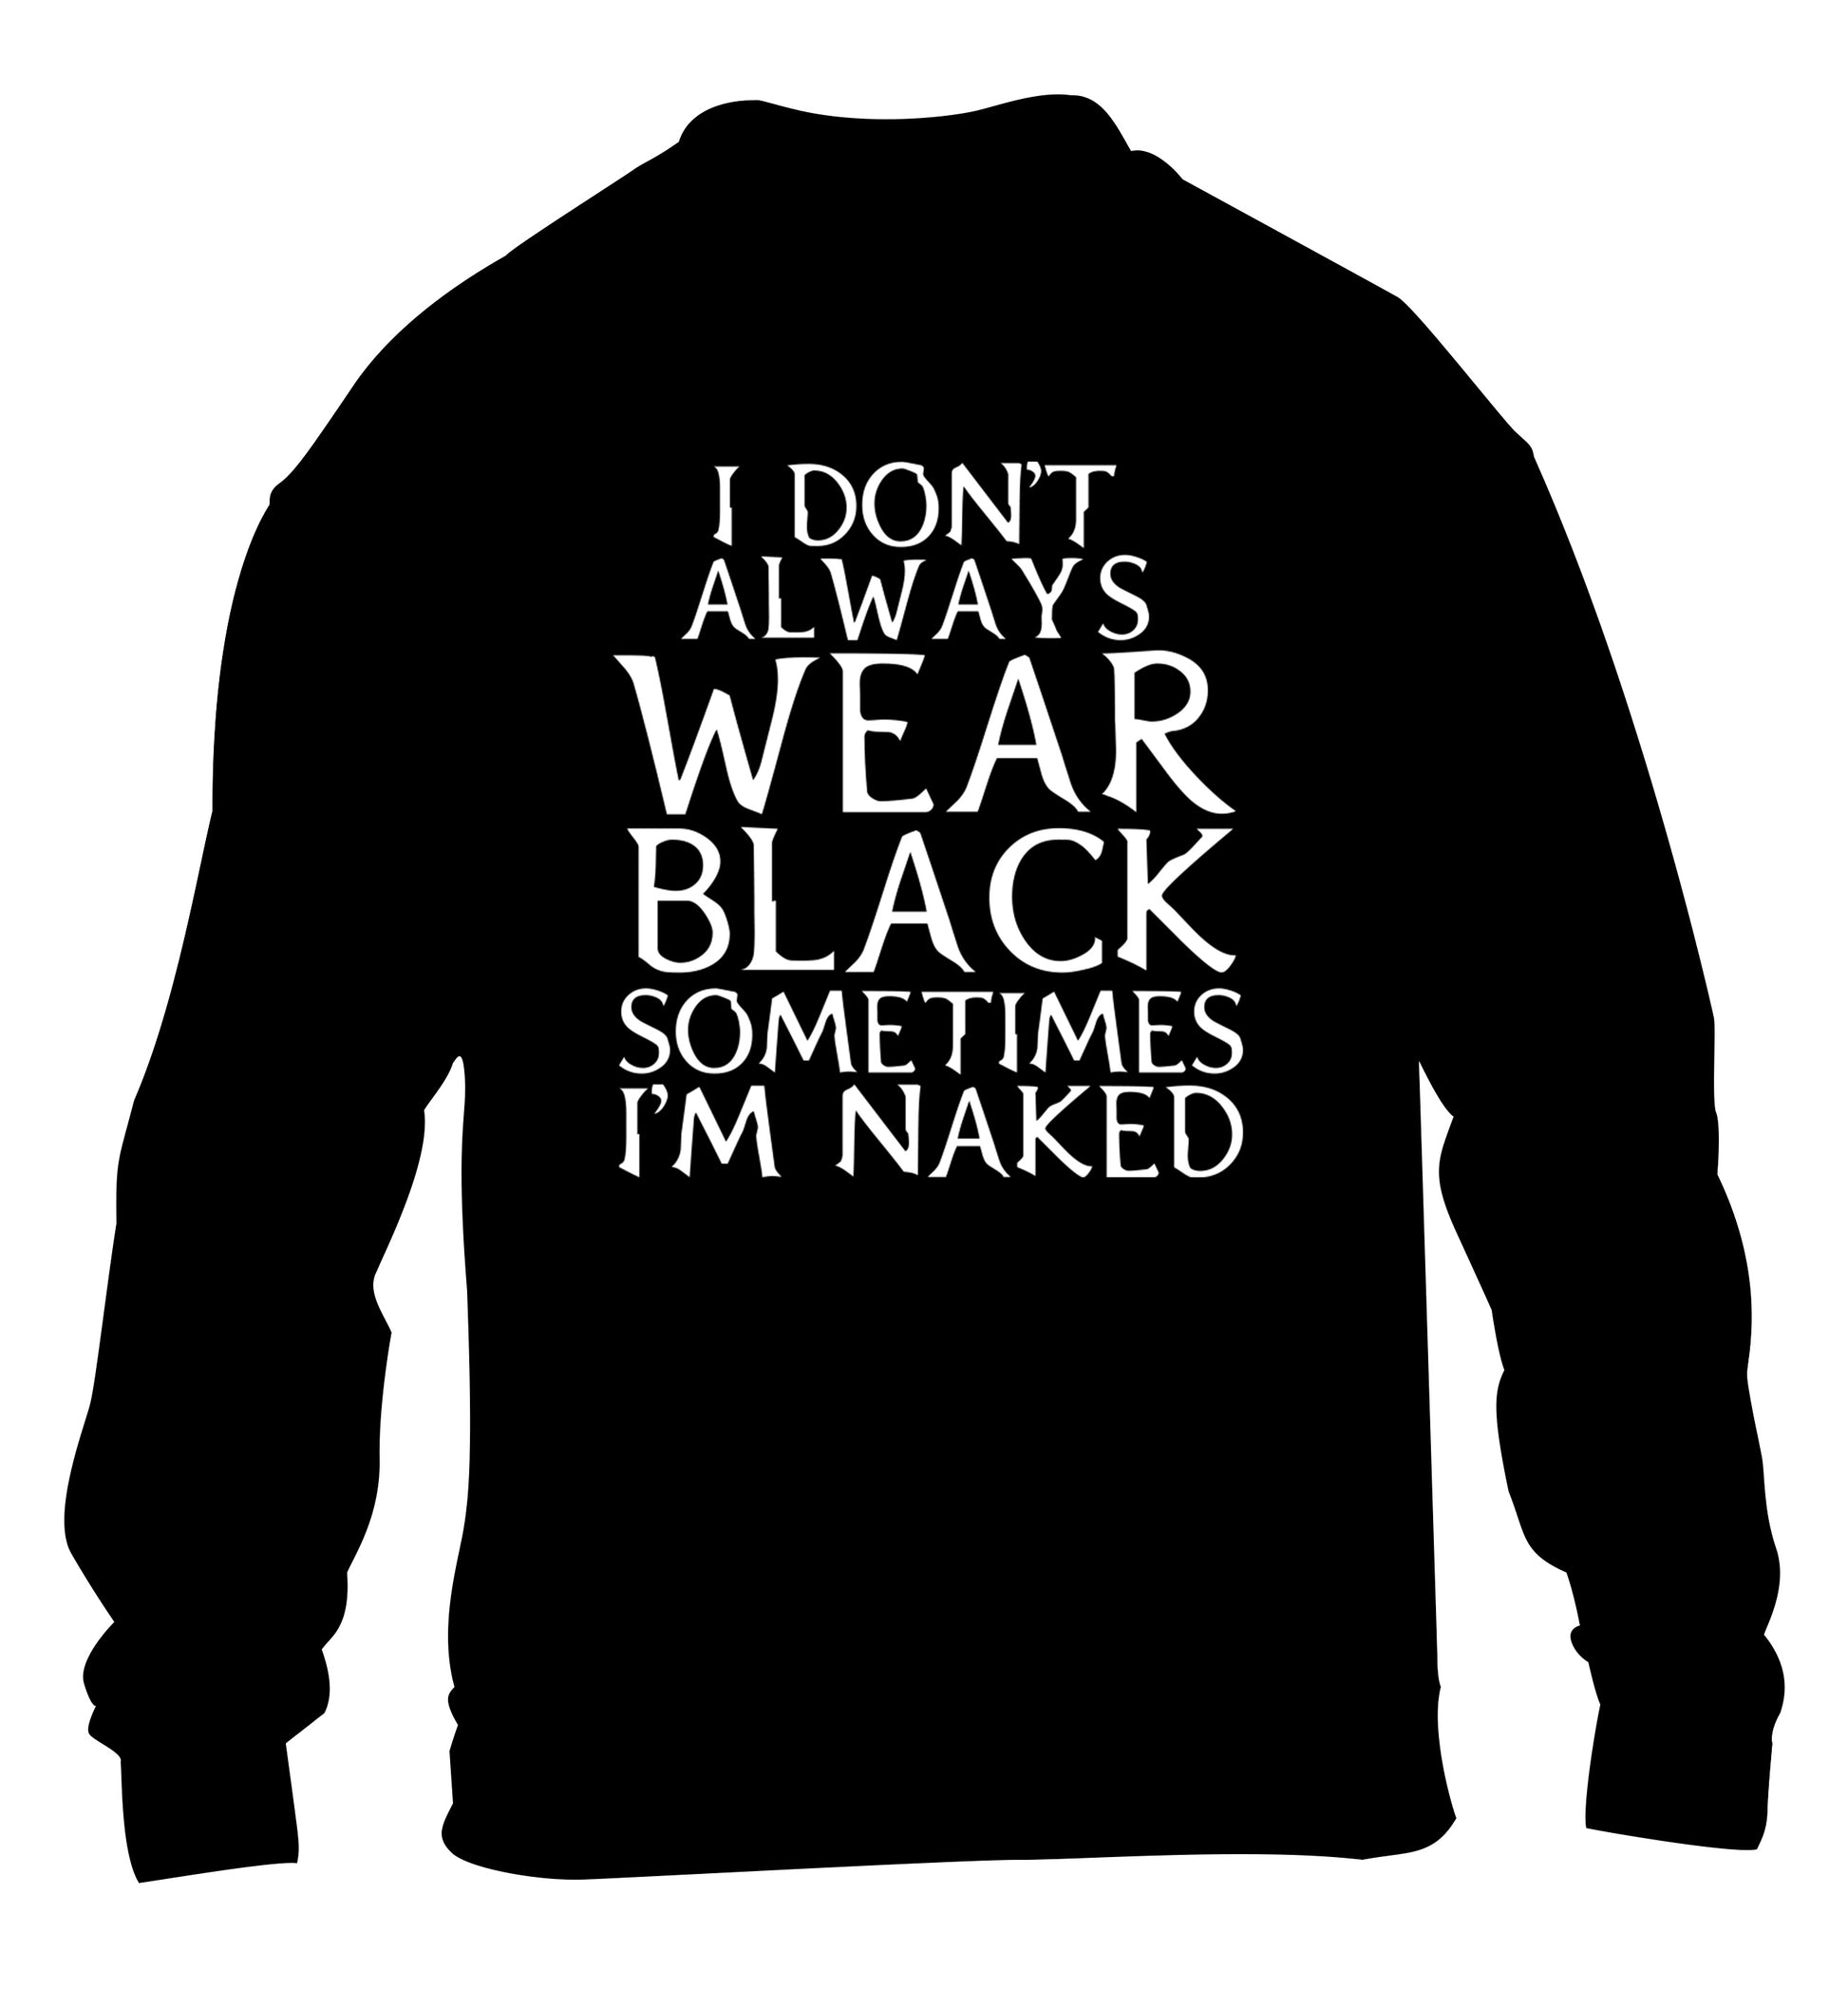 I don't always wear black sometimes I'm naked children's black sweater 12-13 Years